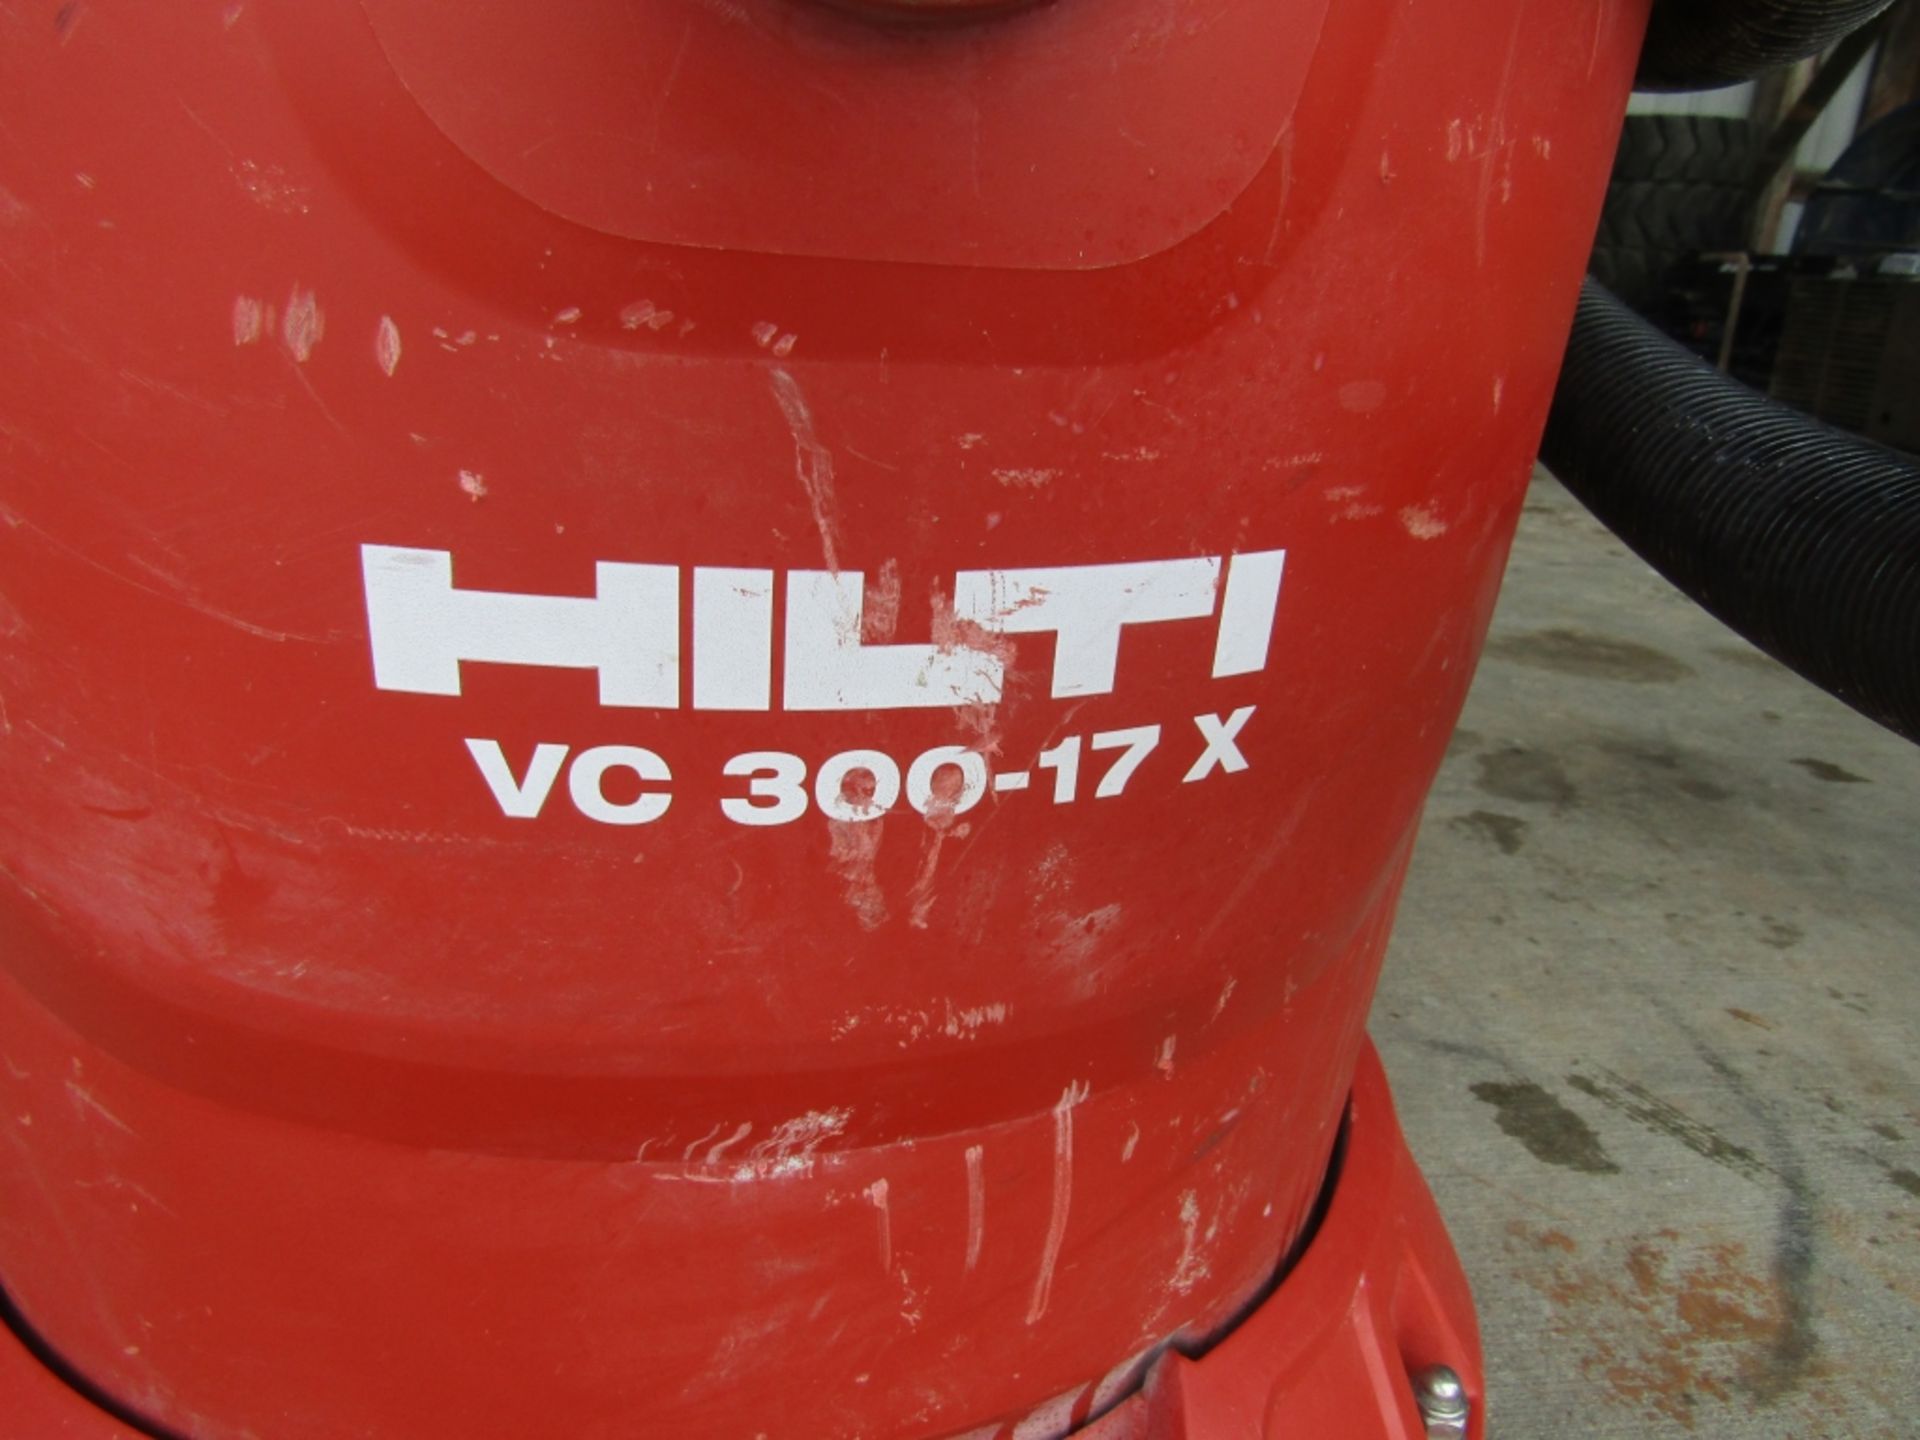 Hilti VC 300-17 X Vacuum, Model VC 300-17 X, Serial #010340, - Image 4 of 5